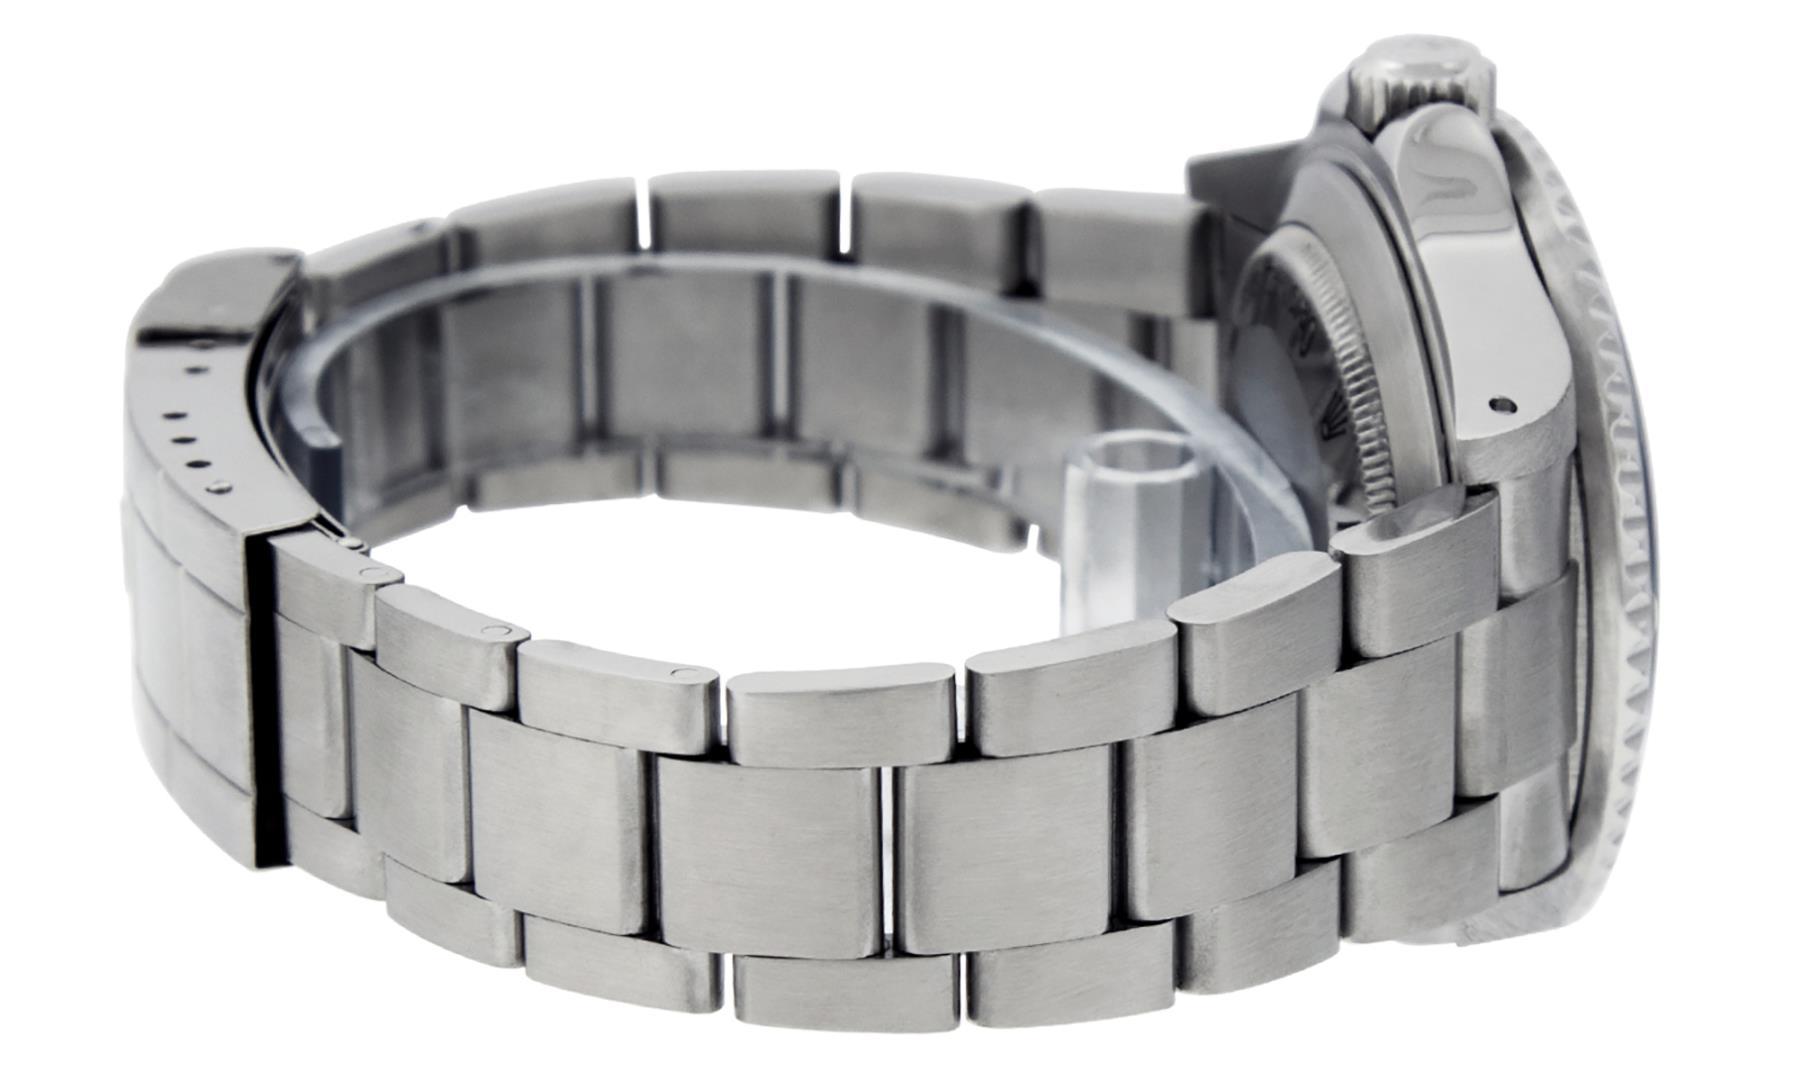 Rolex Mens Stainless Steel Sea Dweller Wristwatch